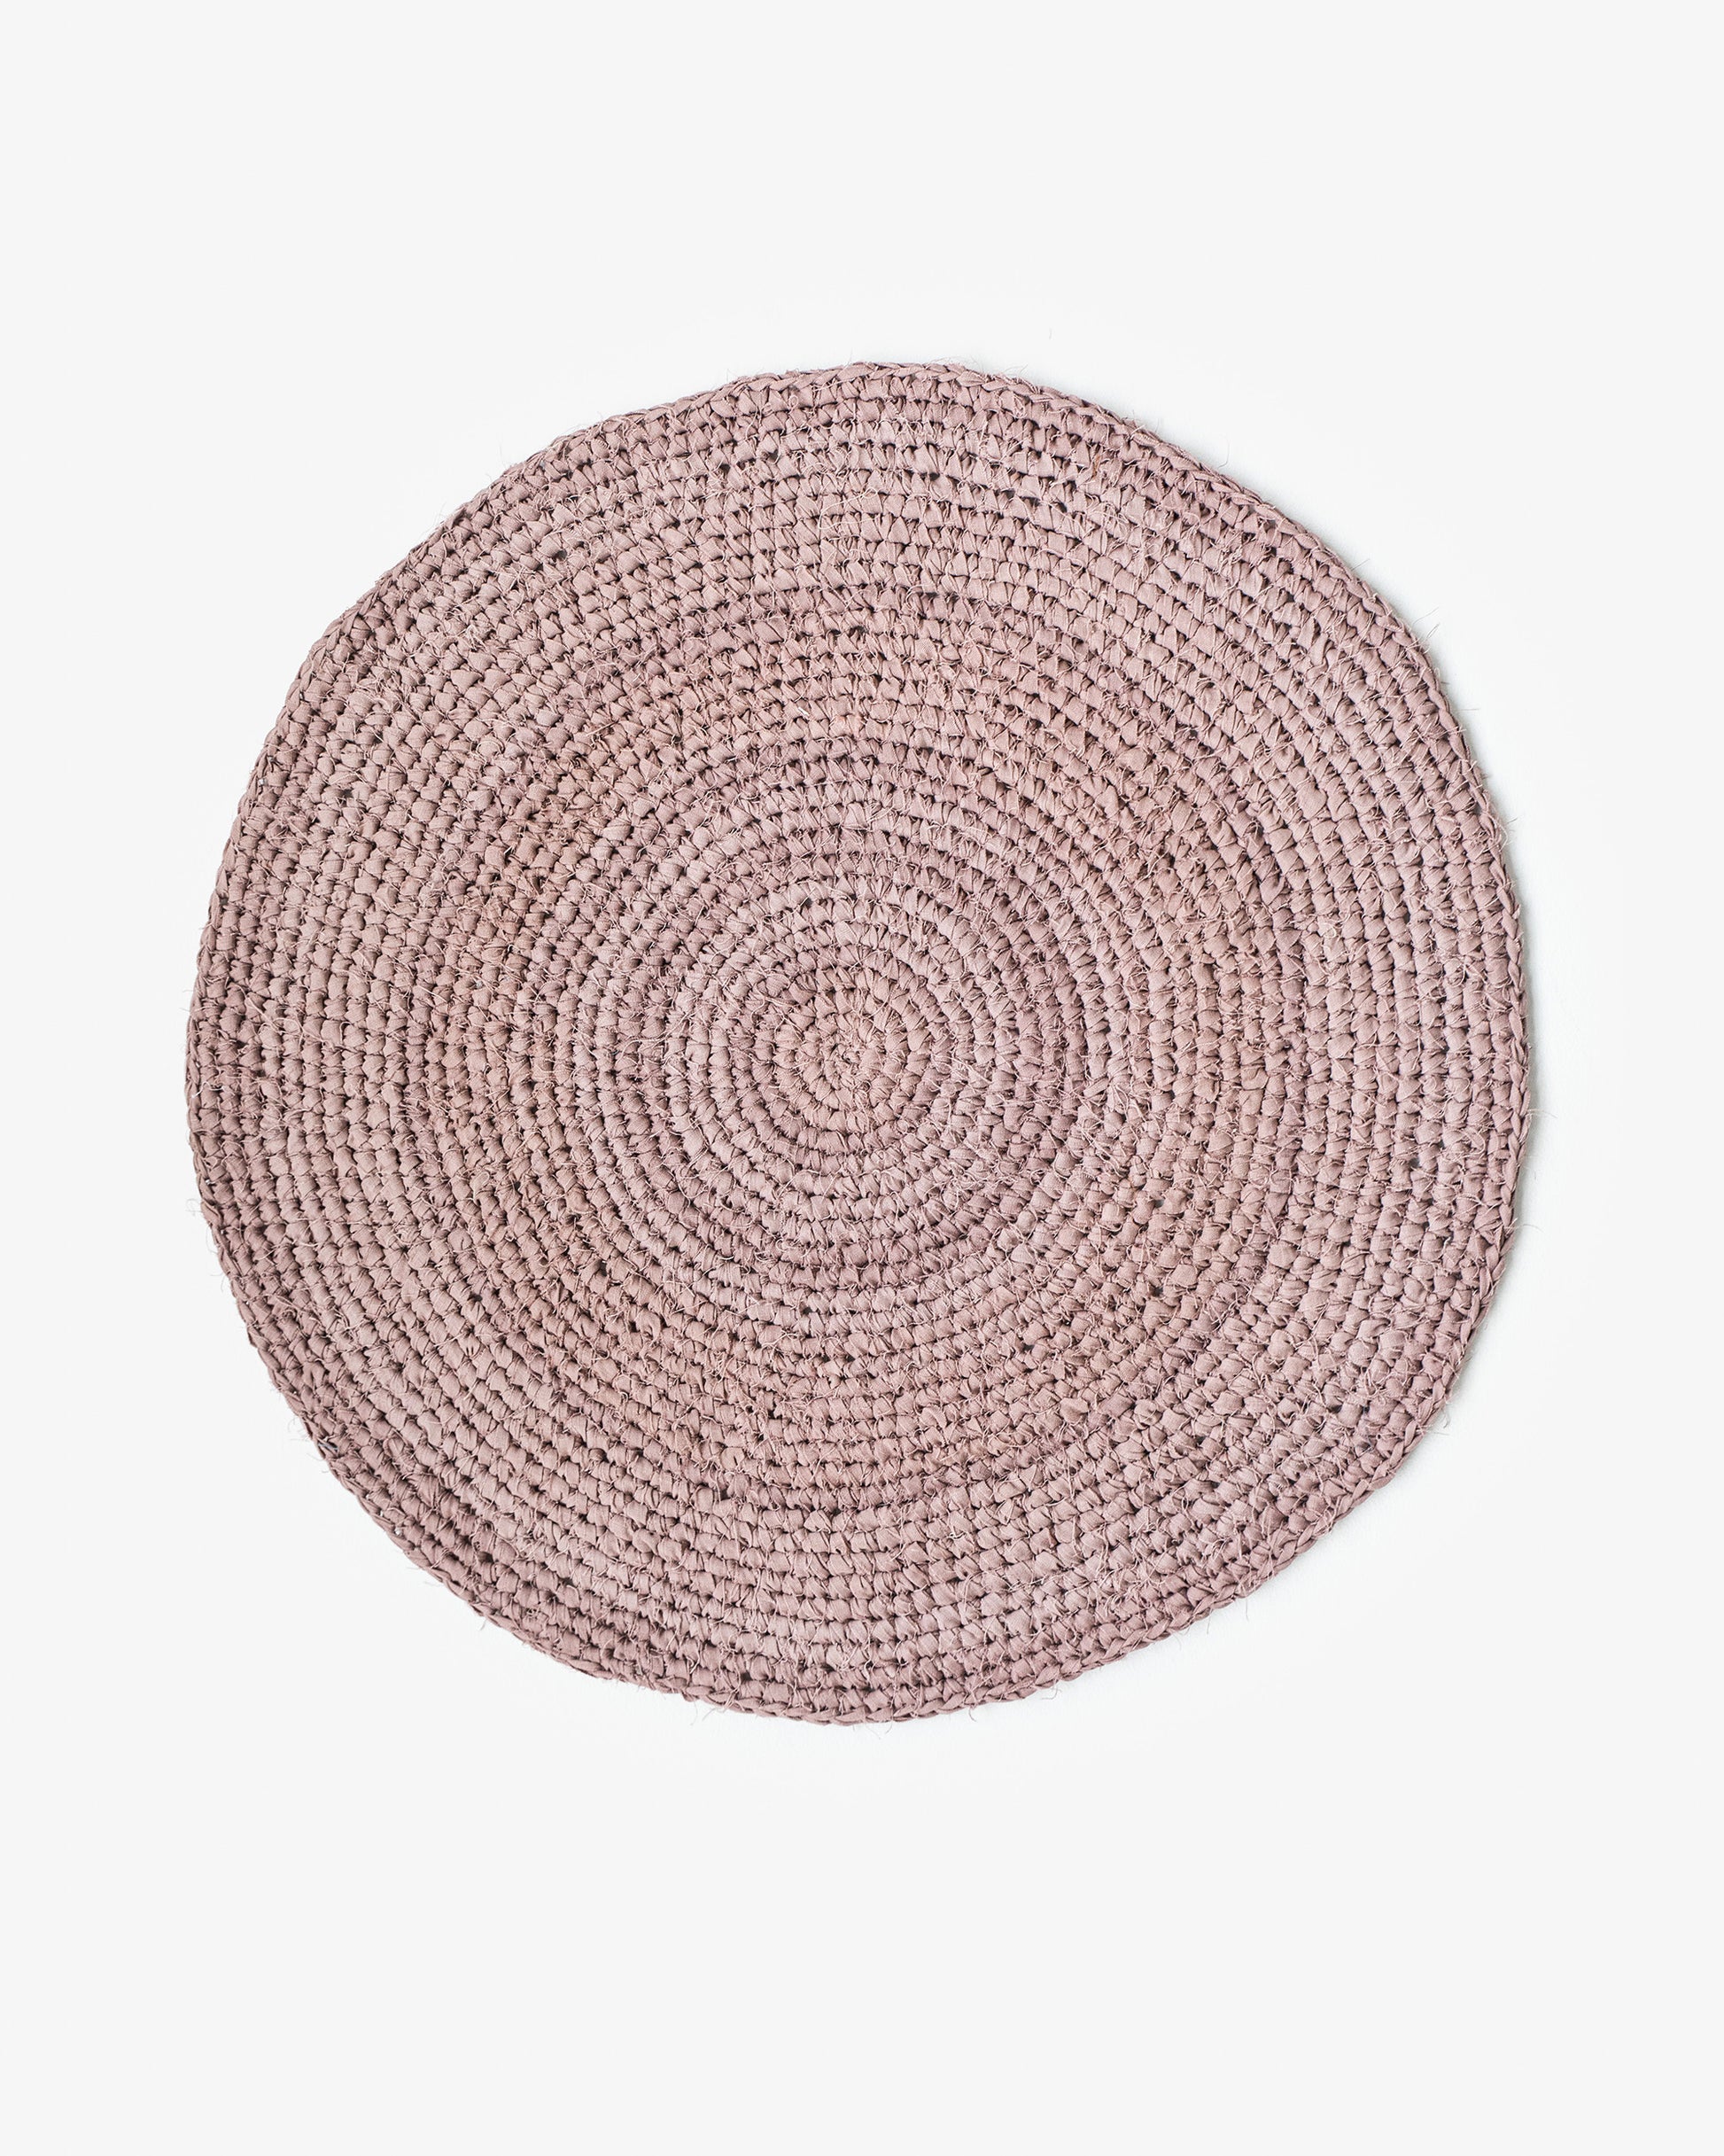 Hand knitted linen rug in Woodrose - MagicLinen